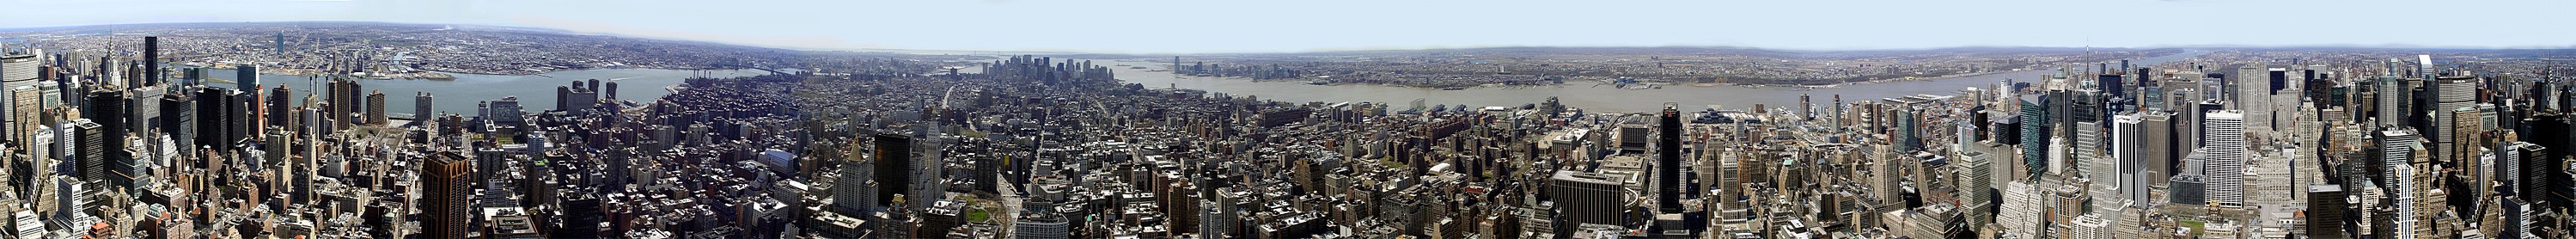 Panoramazicht op New York vanuit Empire State Building